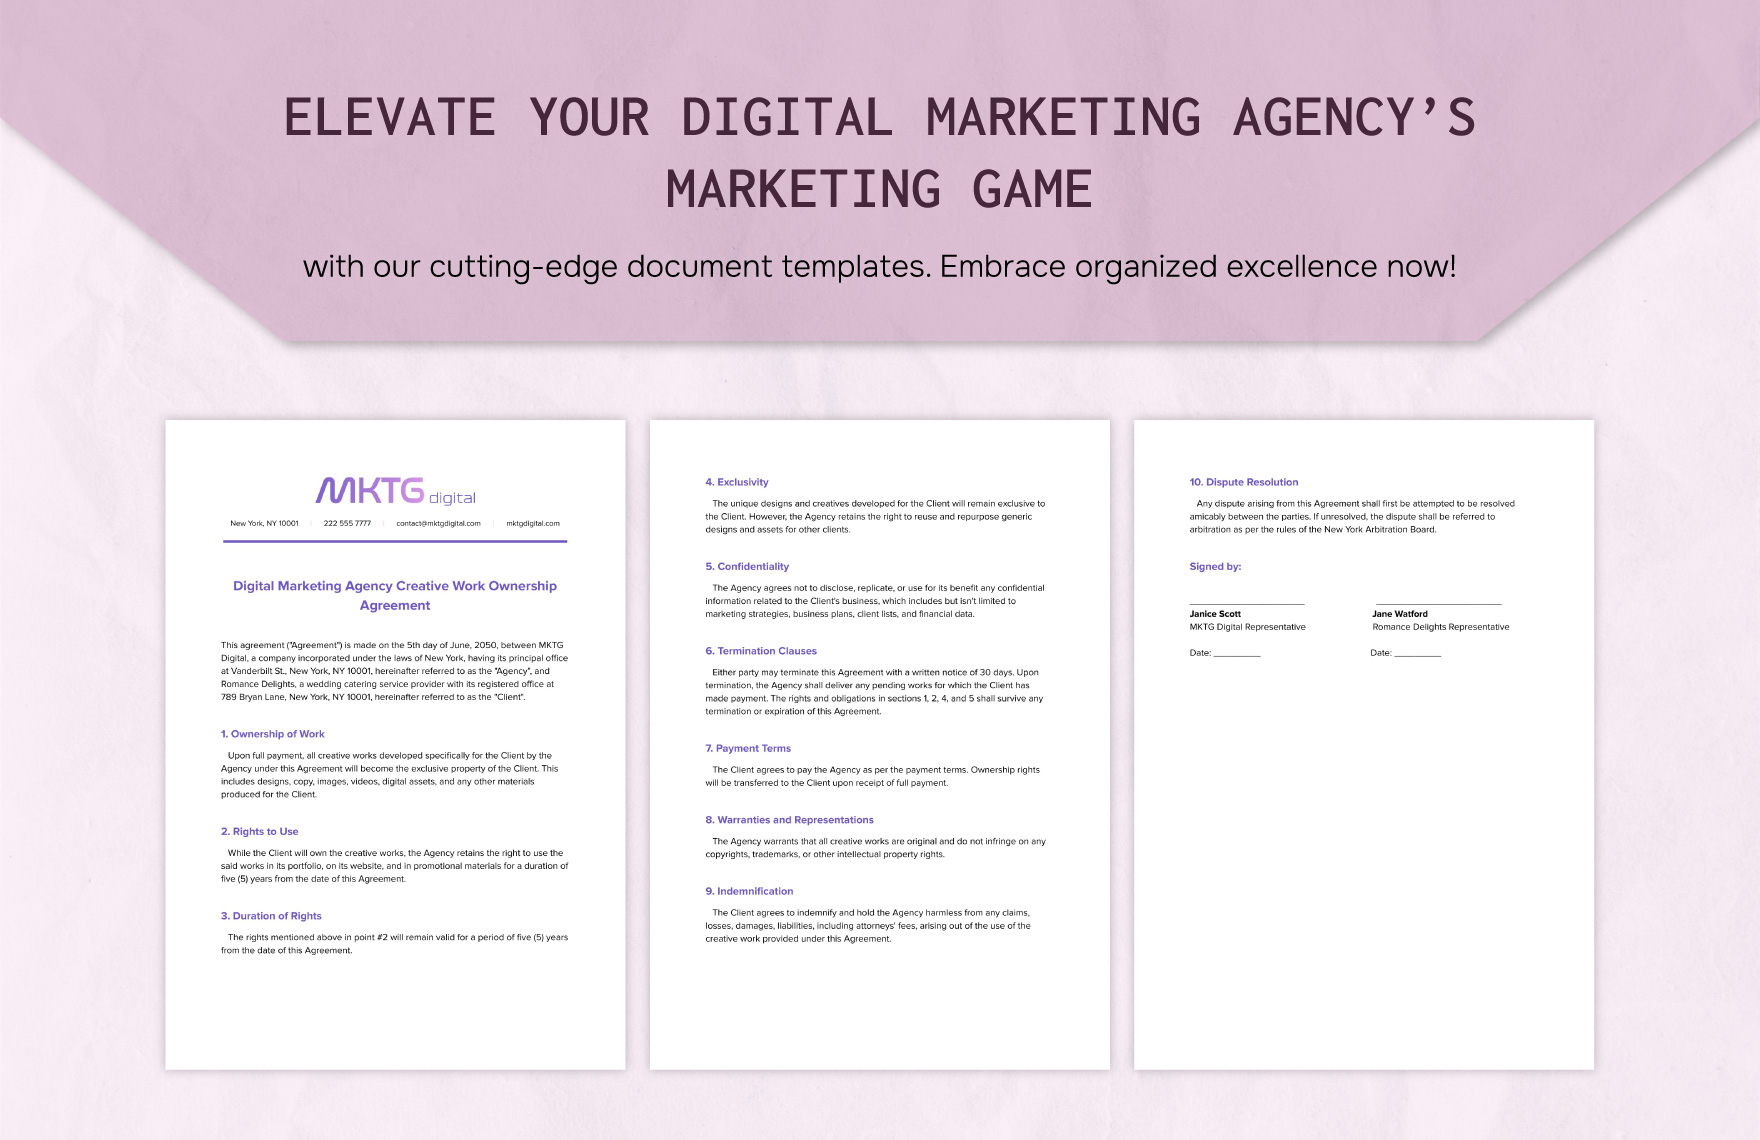 Digital Marketing Agency Creative Work Ownership Agreement Template